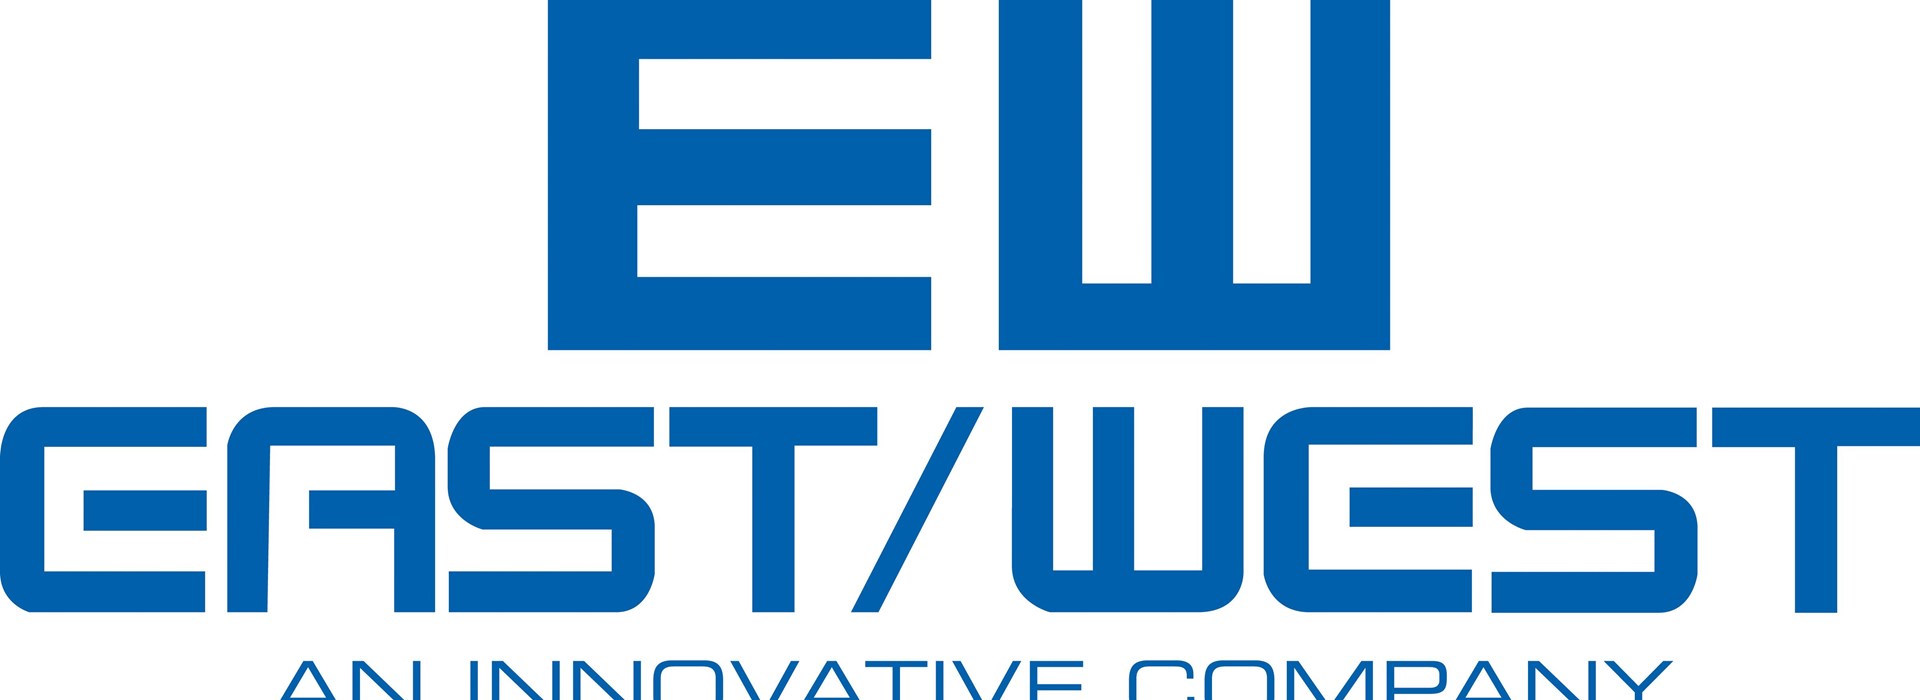 East-West Industries logo